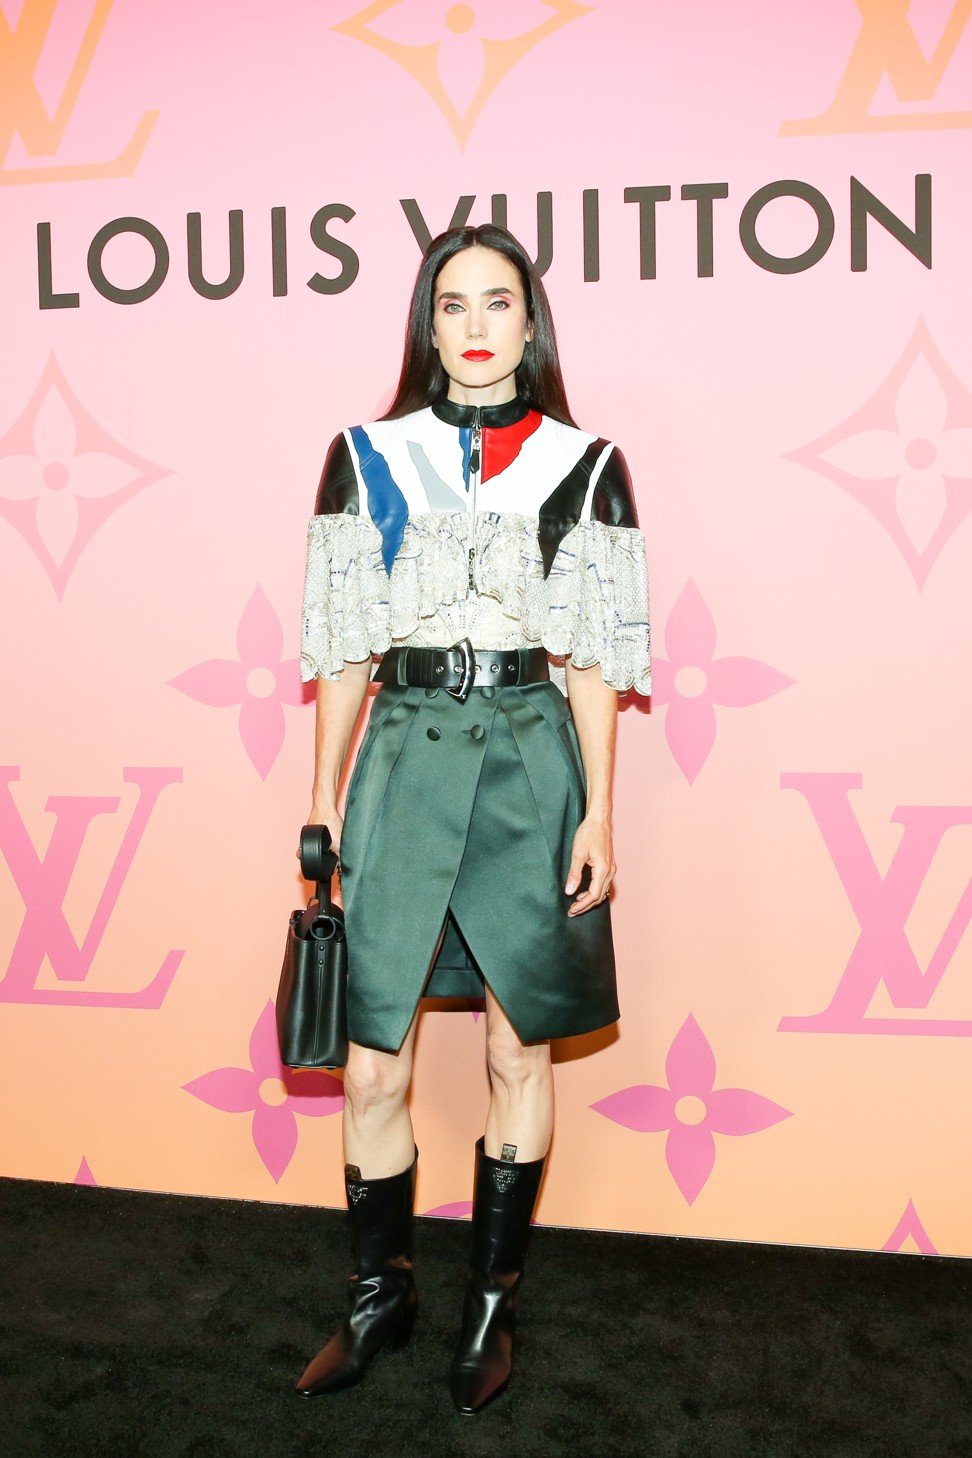 Louis Vuitton Brings Fashion to League of Legends